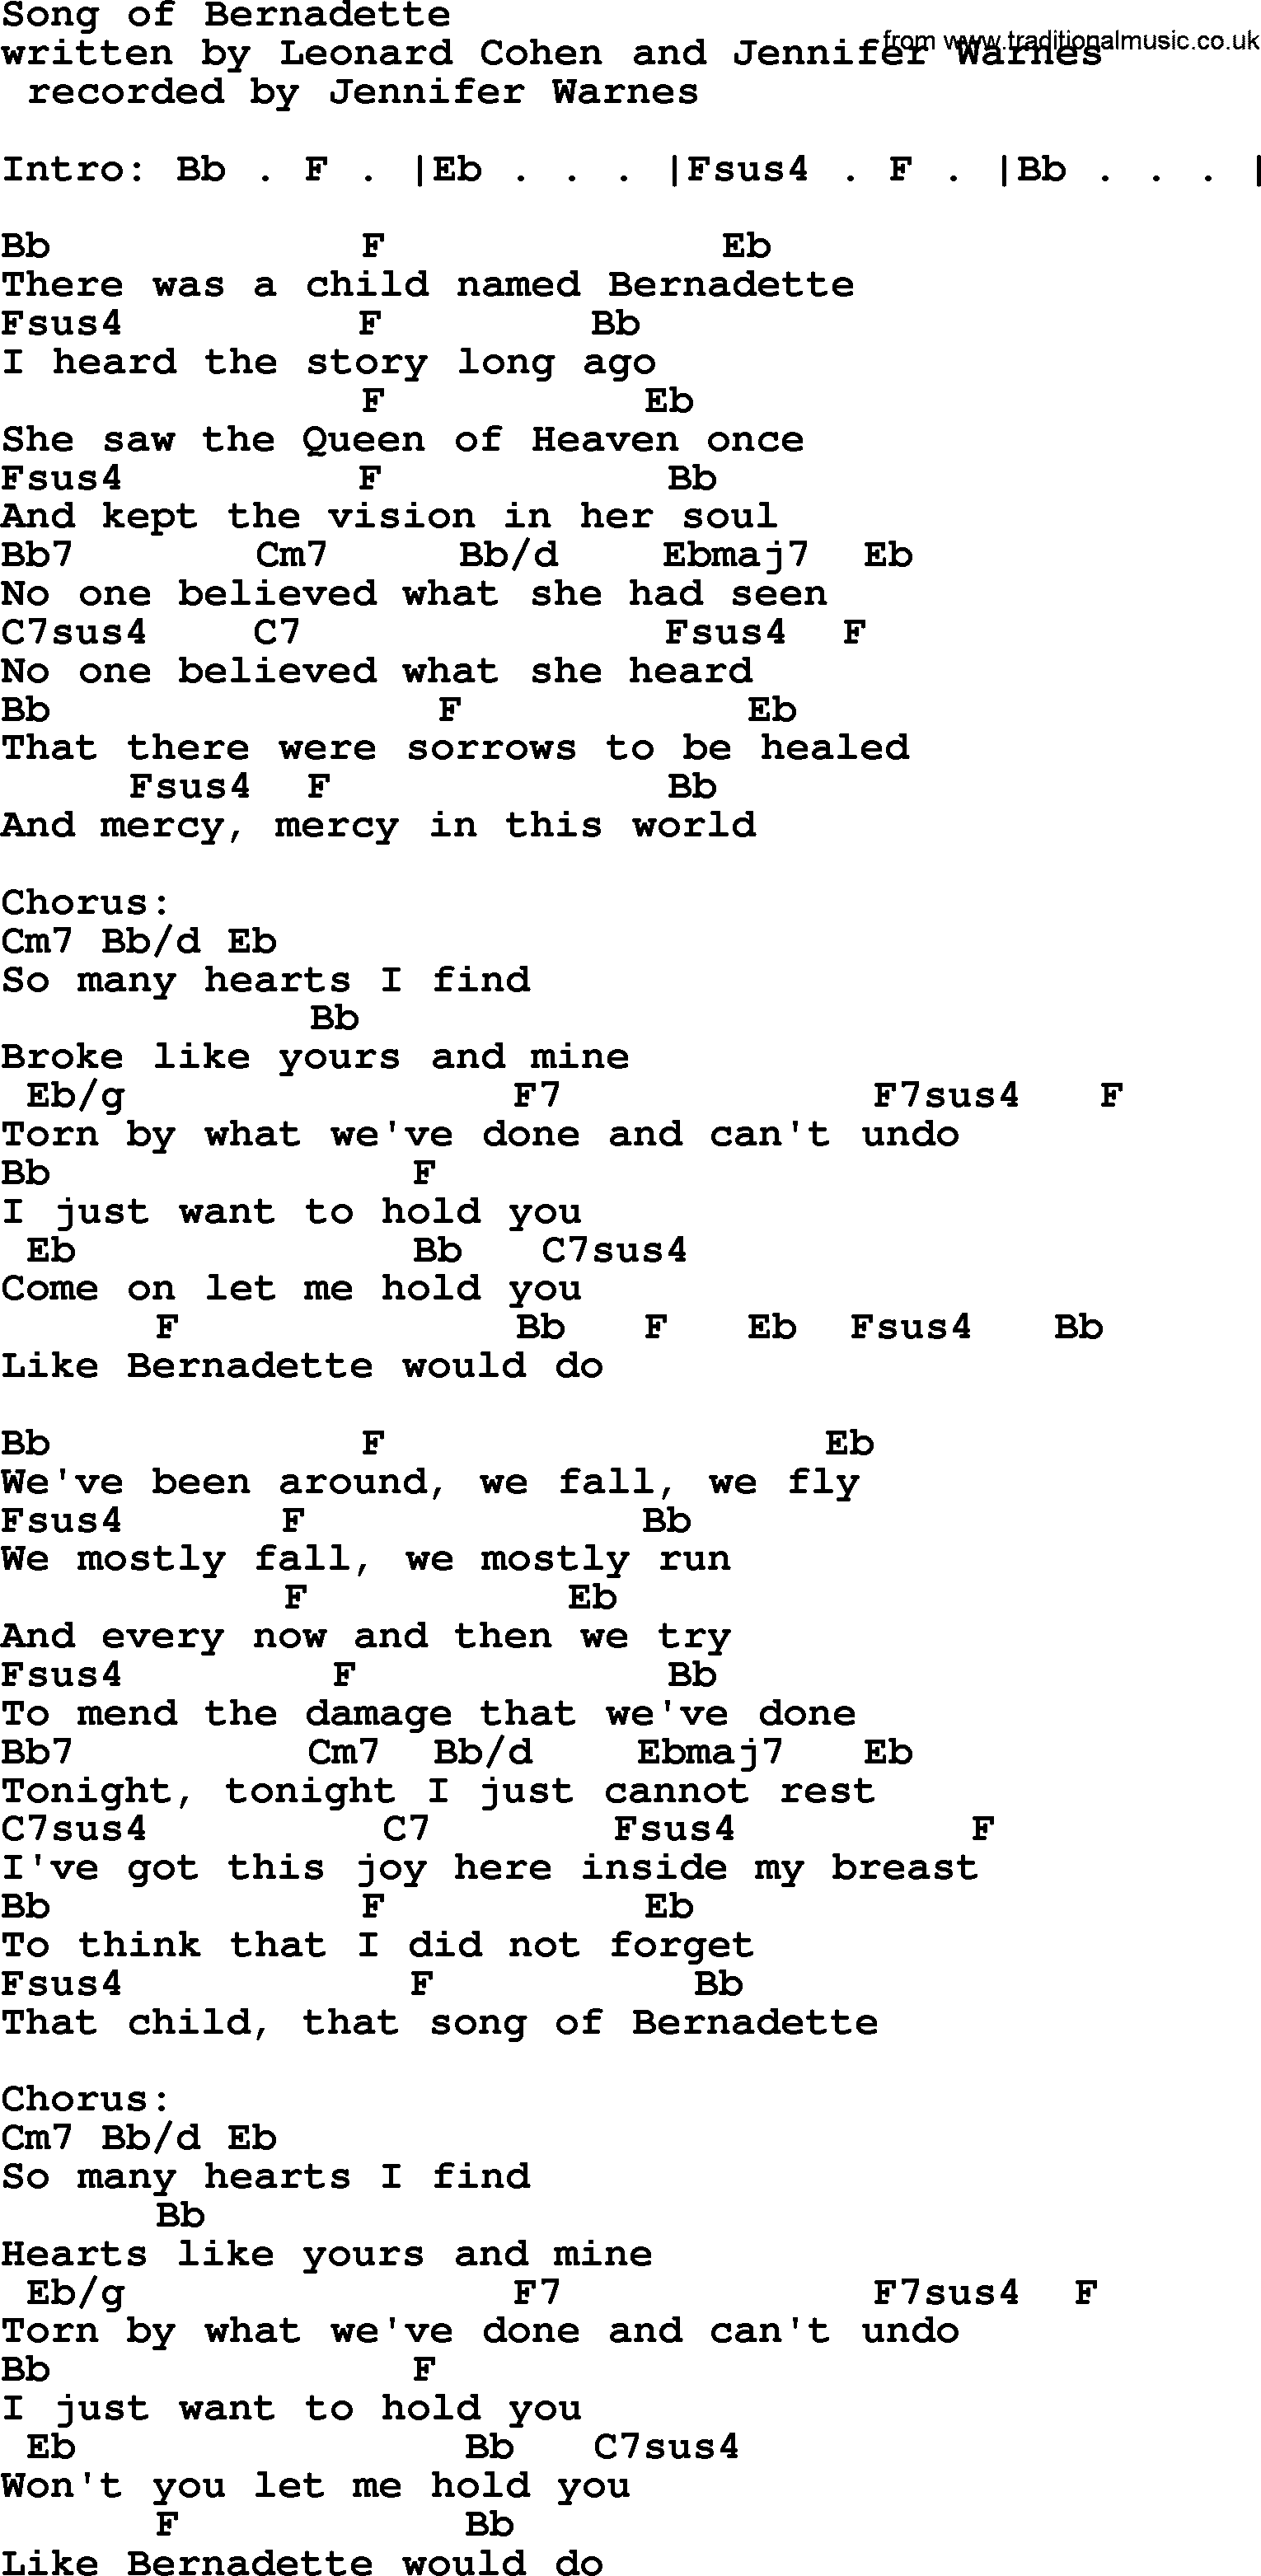 Leonard Cohen song Song Of Bernadette, lyrics and chords